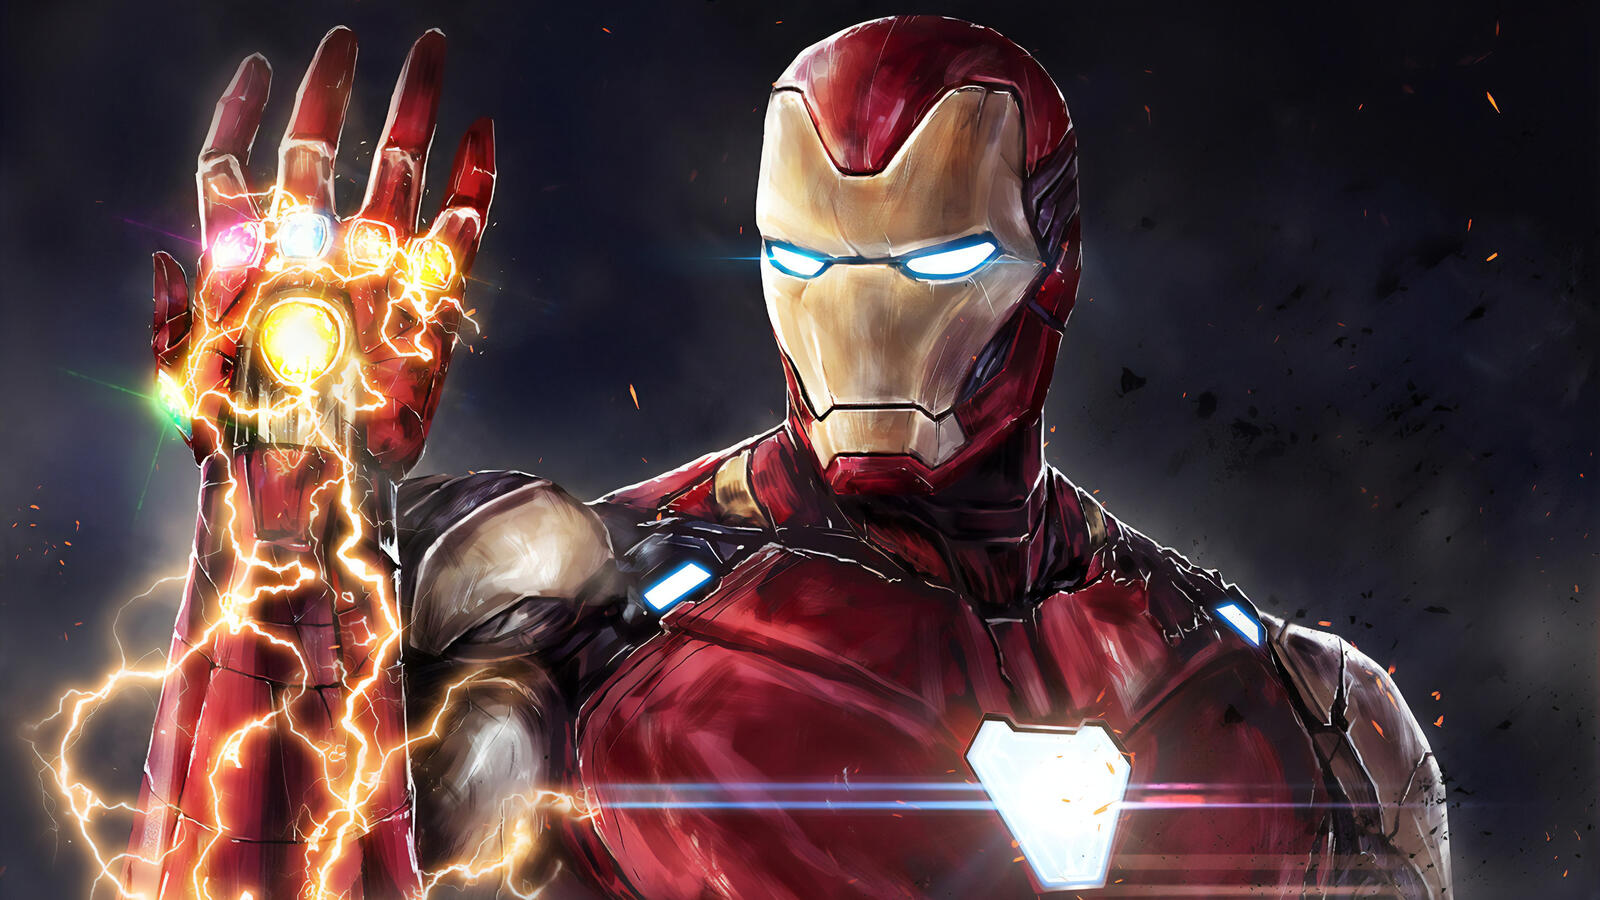 Wallpapers rendering Avengers Endgame movies on the desktop